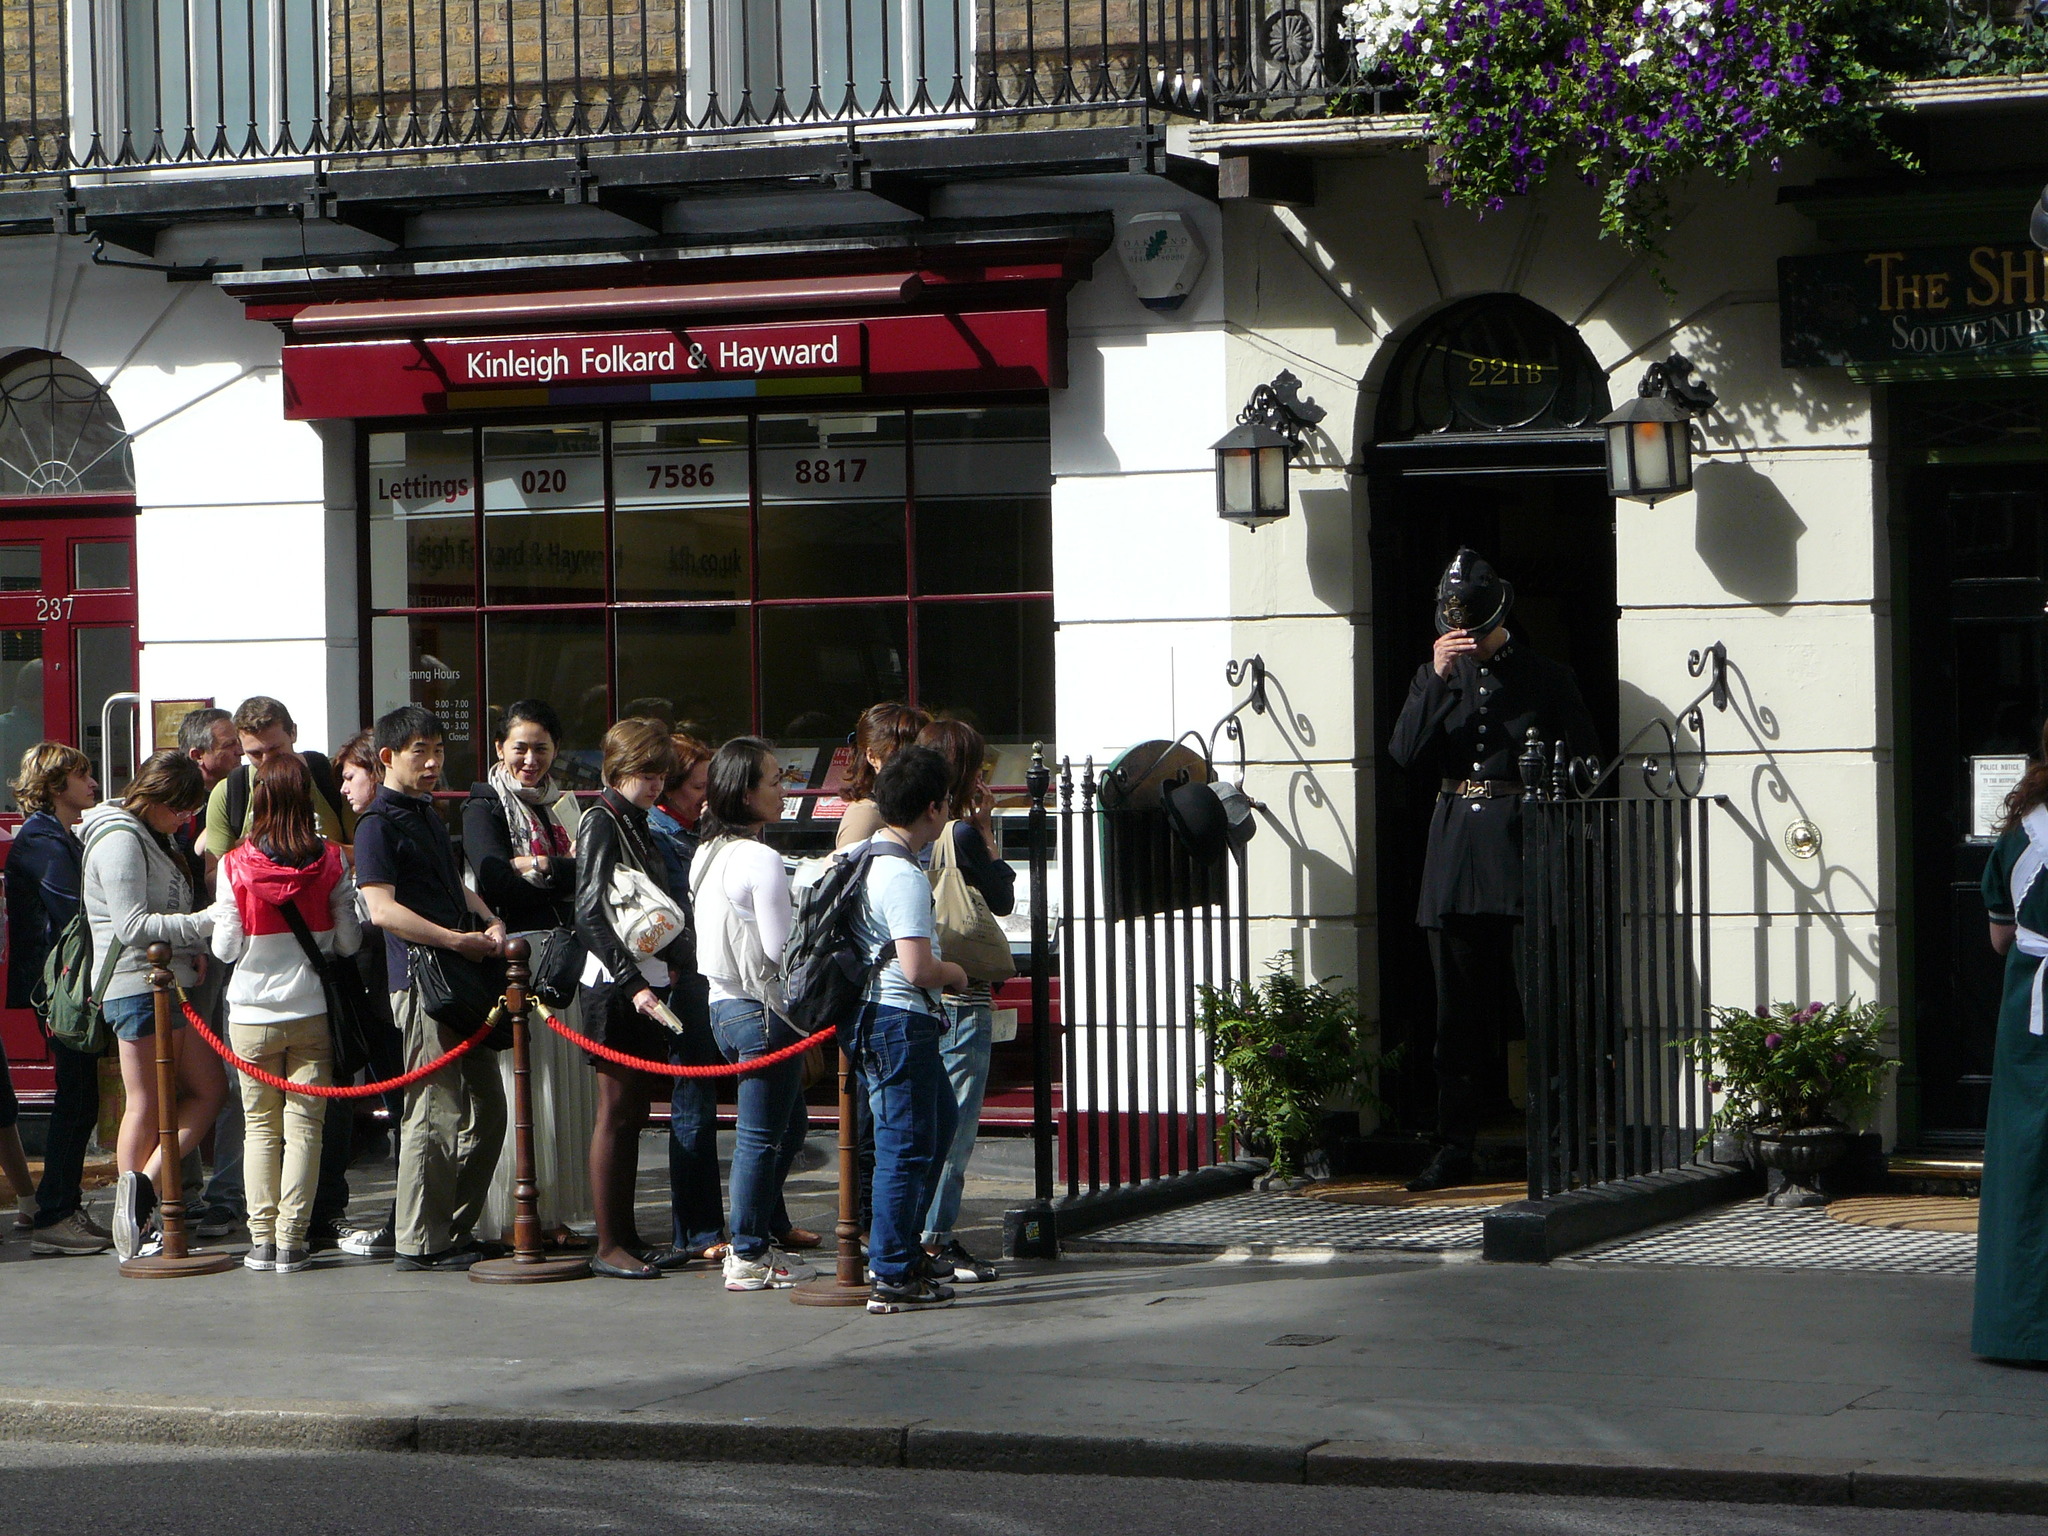 Baker Street (London, UK) - My, Sherlock Holmes, Museum, London, Great Britain, Literature, Travels, Longpost